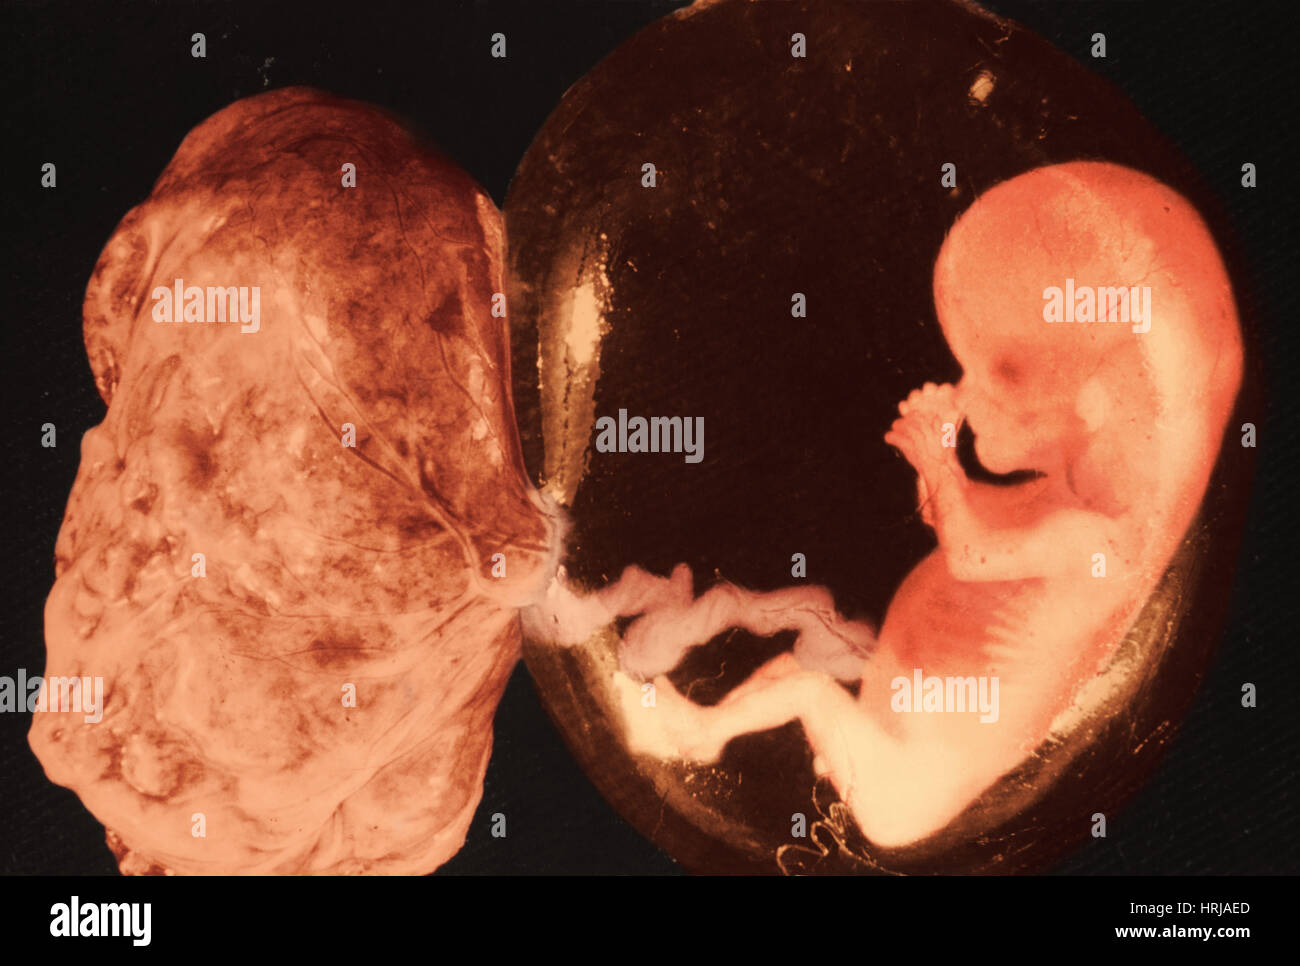 Les Foetus A 13 Semaines Photo Stock Alamy